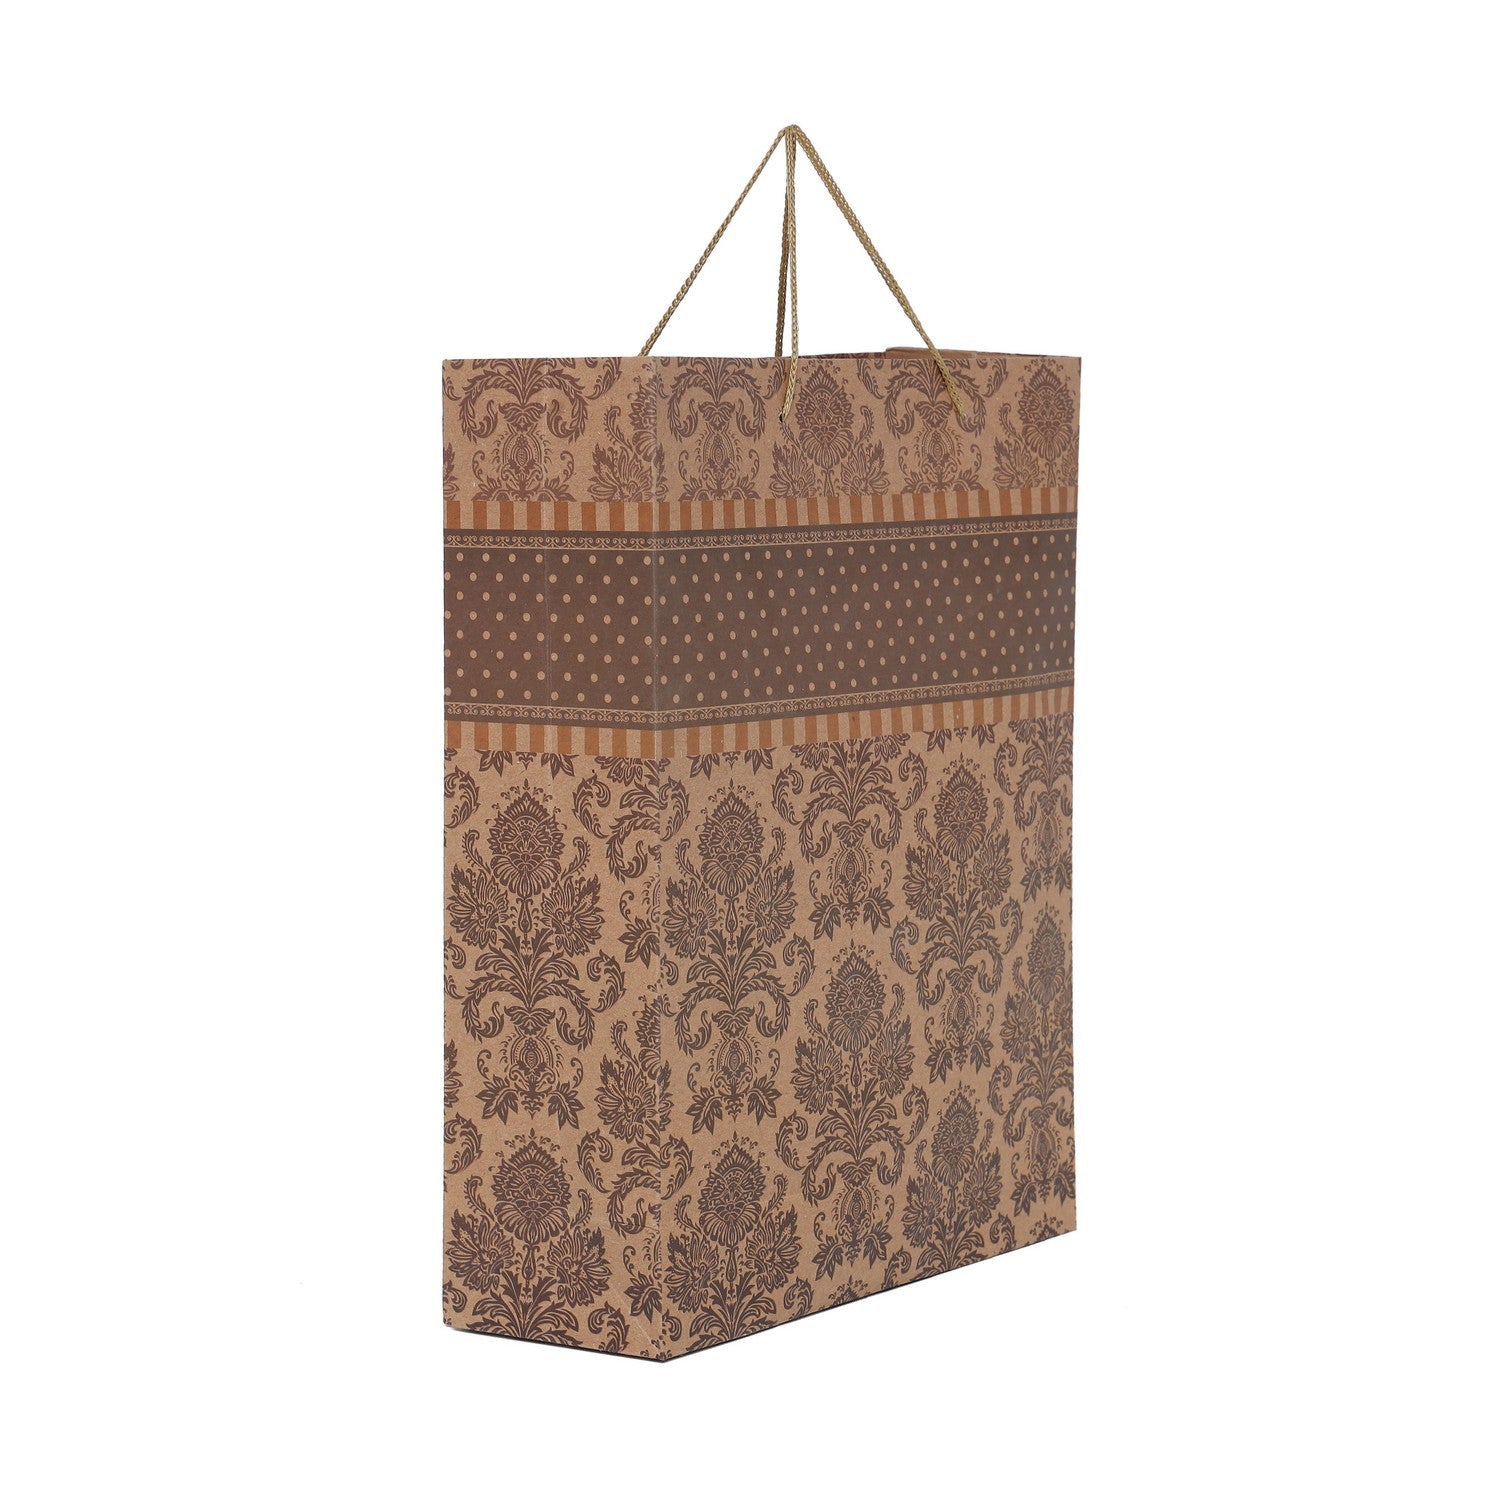 SHUBAN handmade texture design Paper Bag for Gifting, Weddings, Anniversary, Birthday, Holiday Presents (32 X 23 X 8.5 CM ) - Set of 5 | Book Bargain Buy